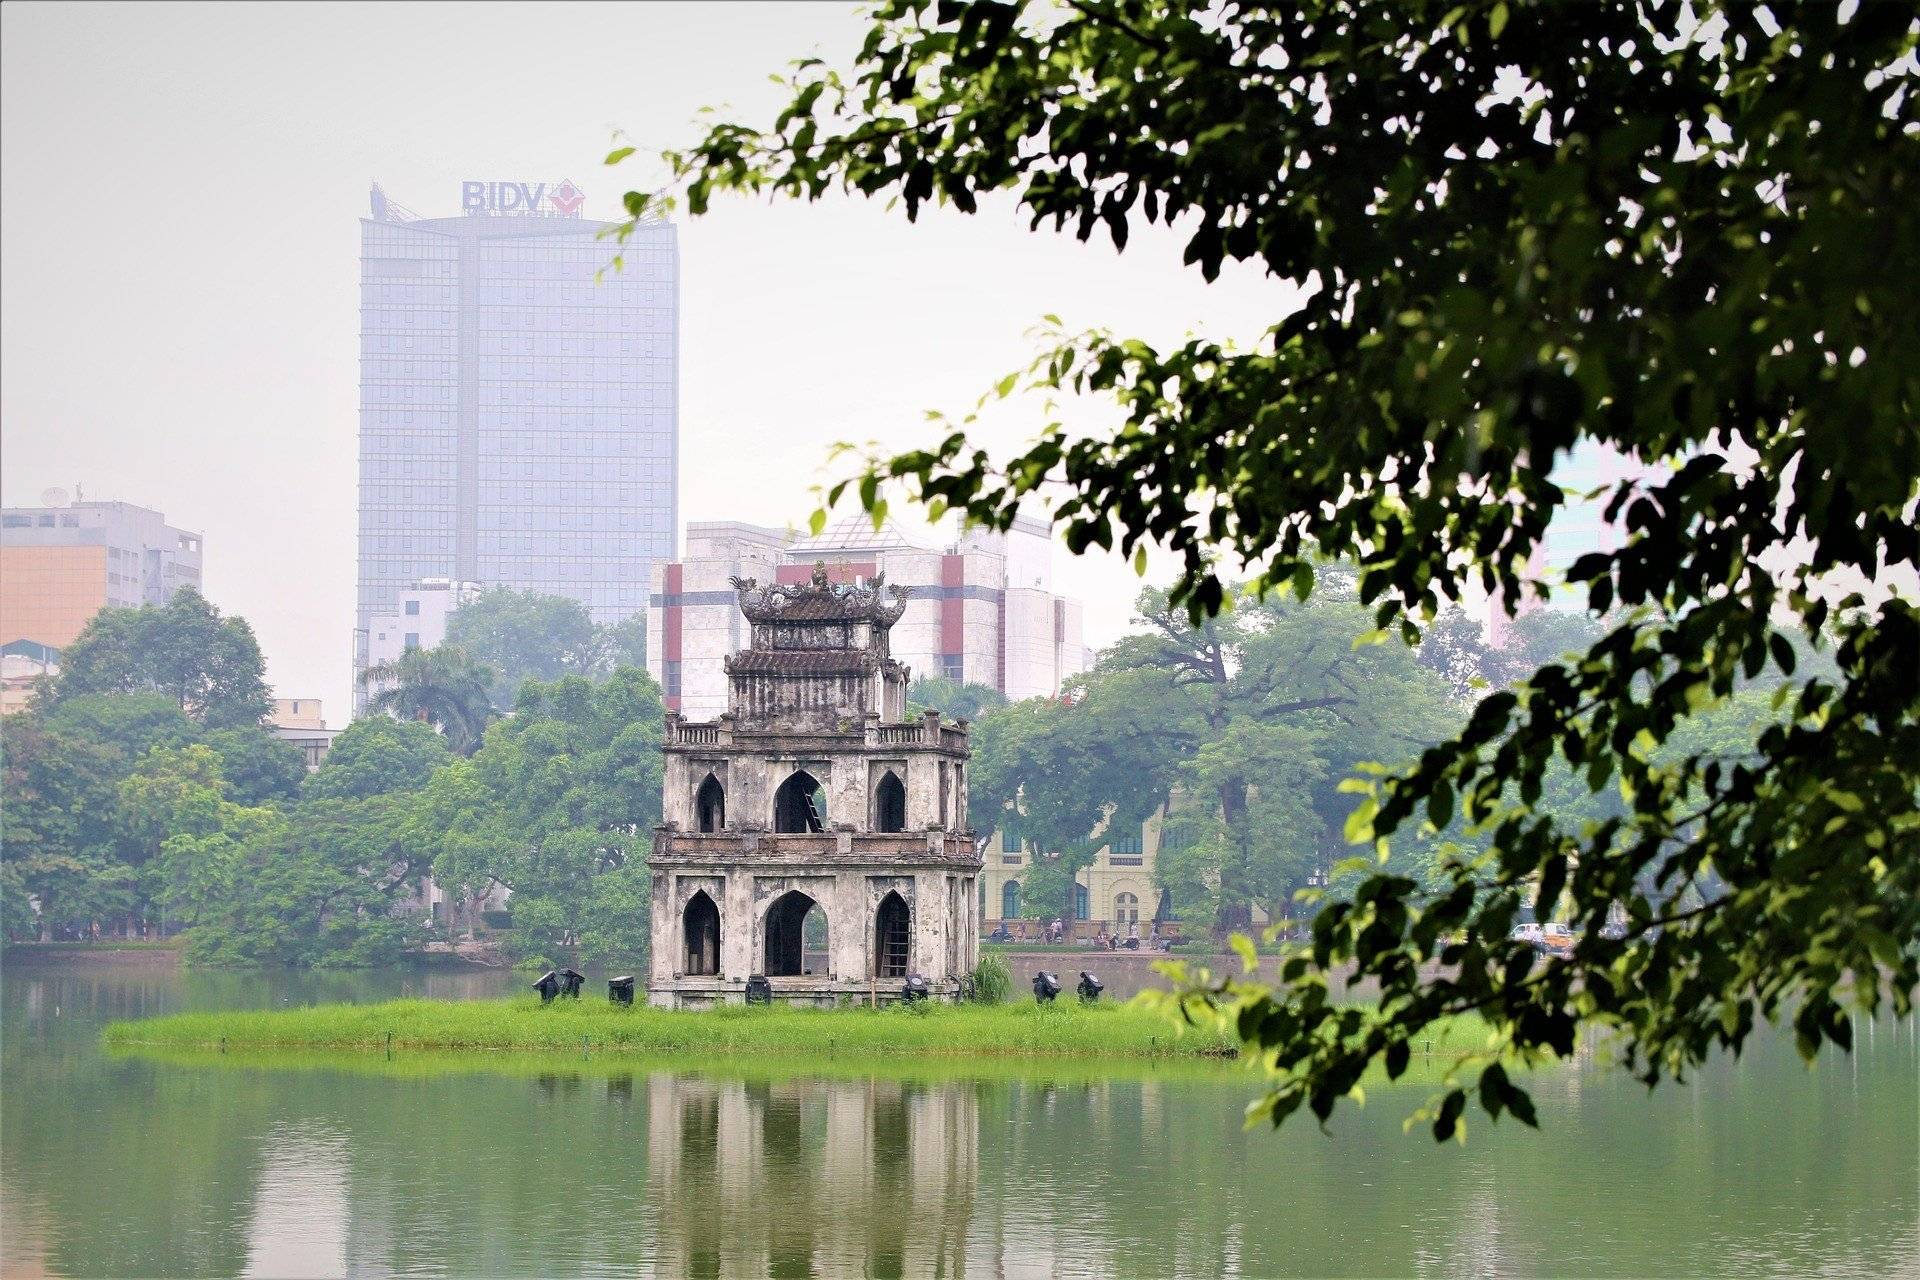 Bienvenue à Hanoi !